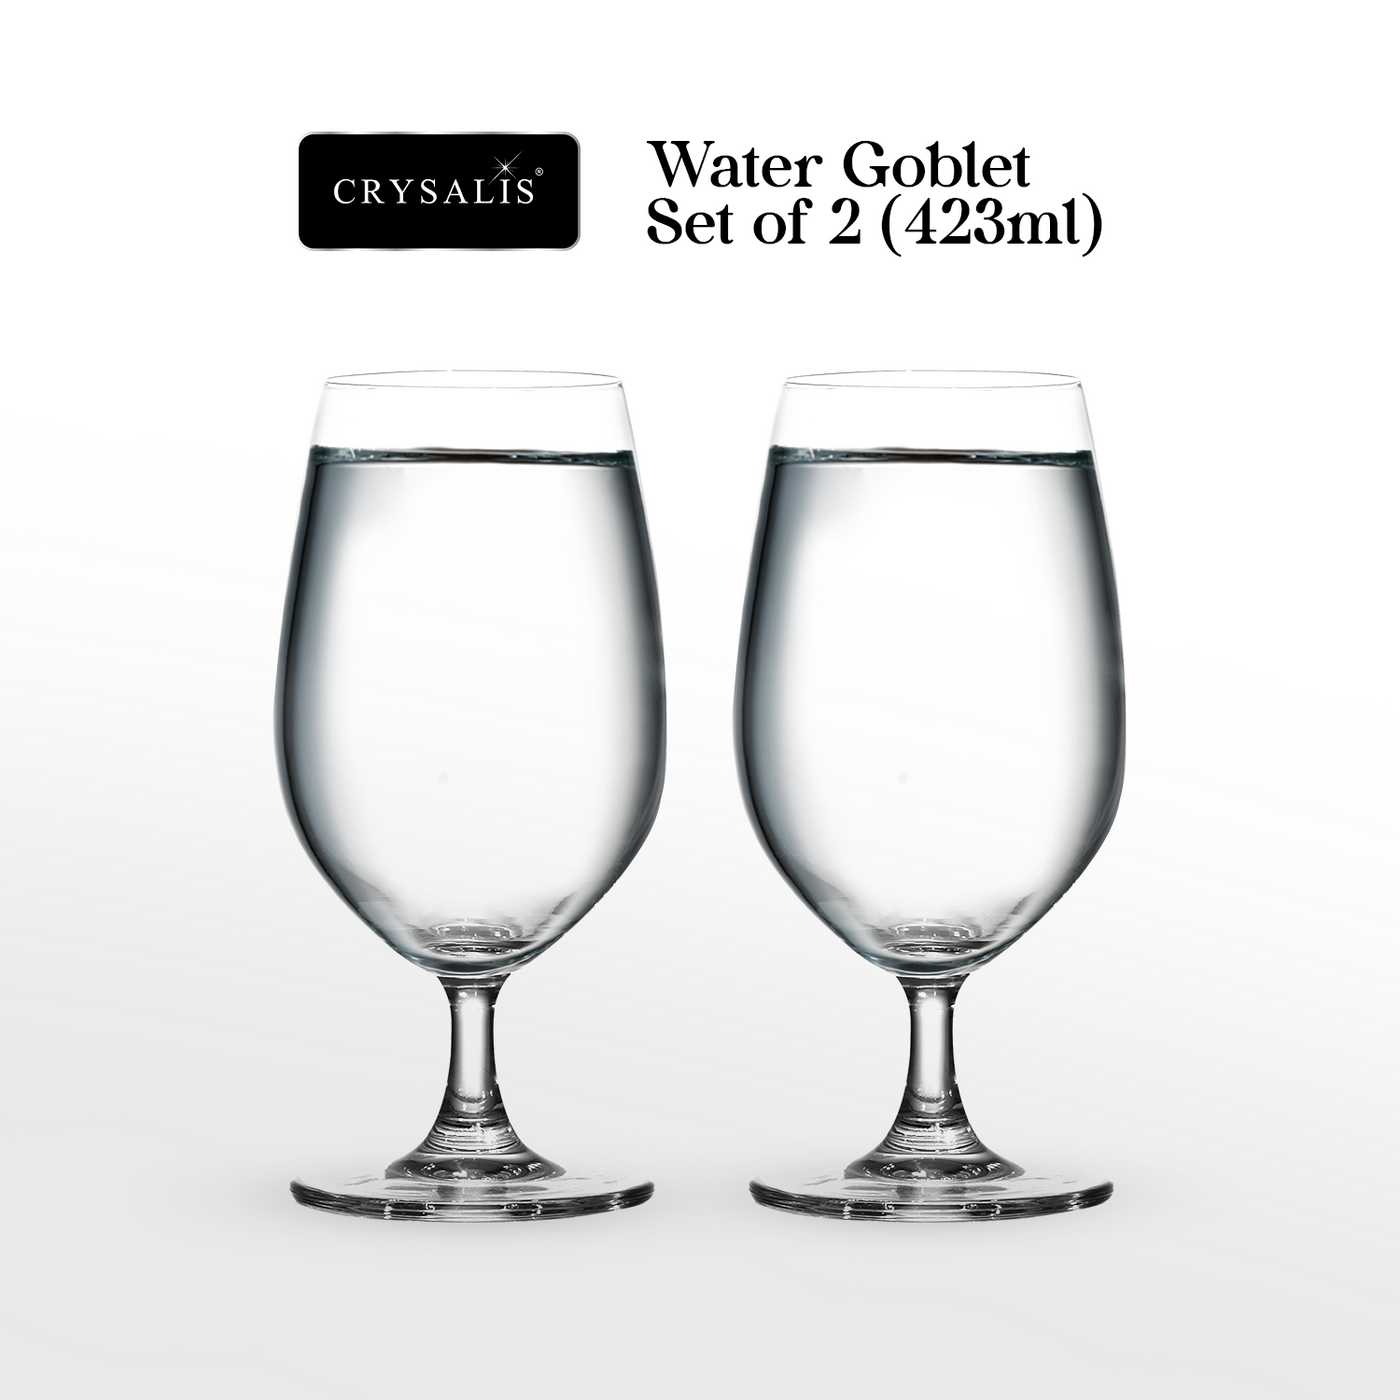 CRYSALIS Premium Crystal Water Goblet Glass [Set of 2] 423ml Stemware